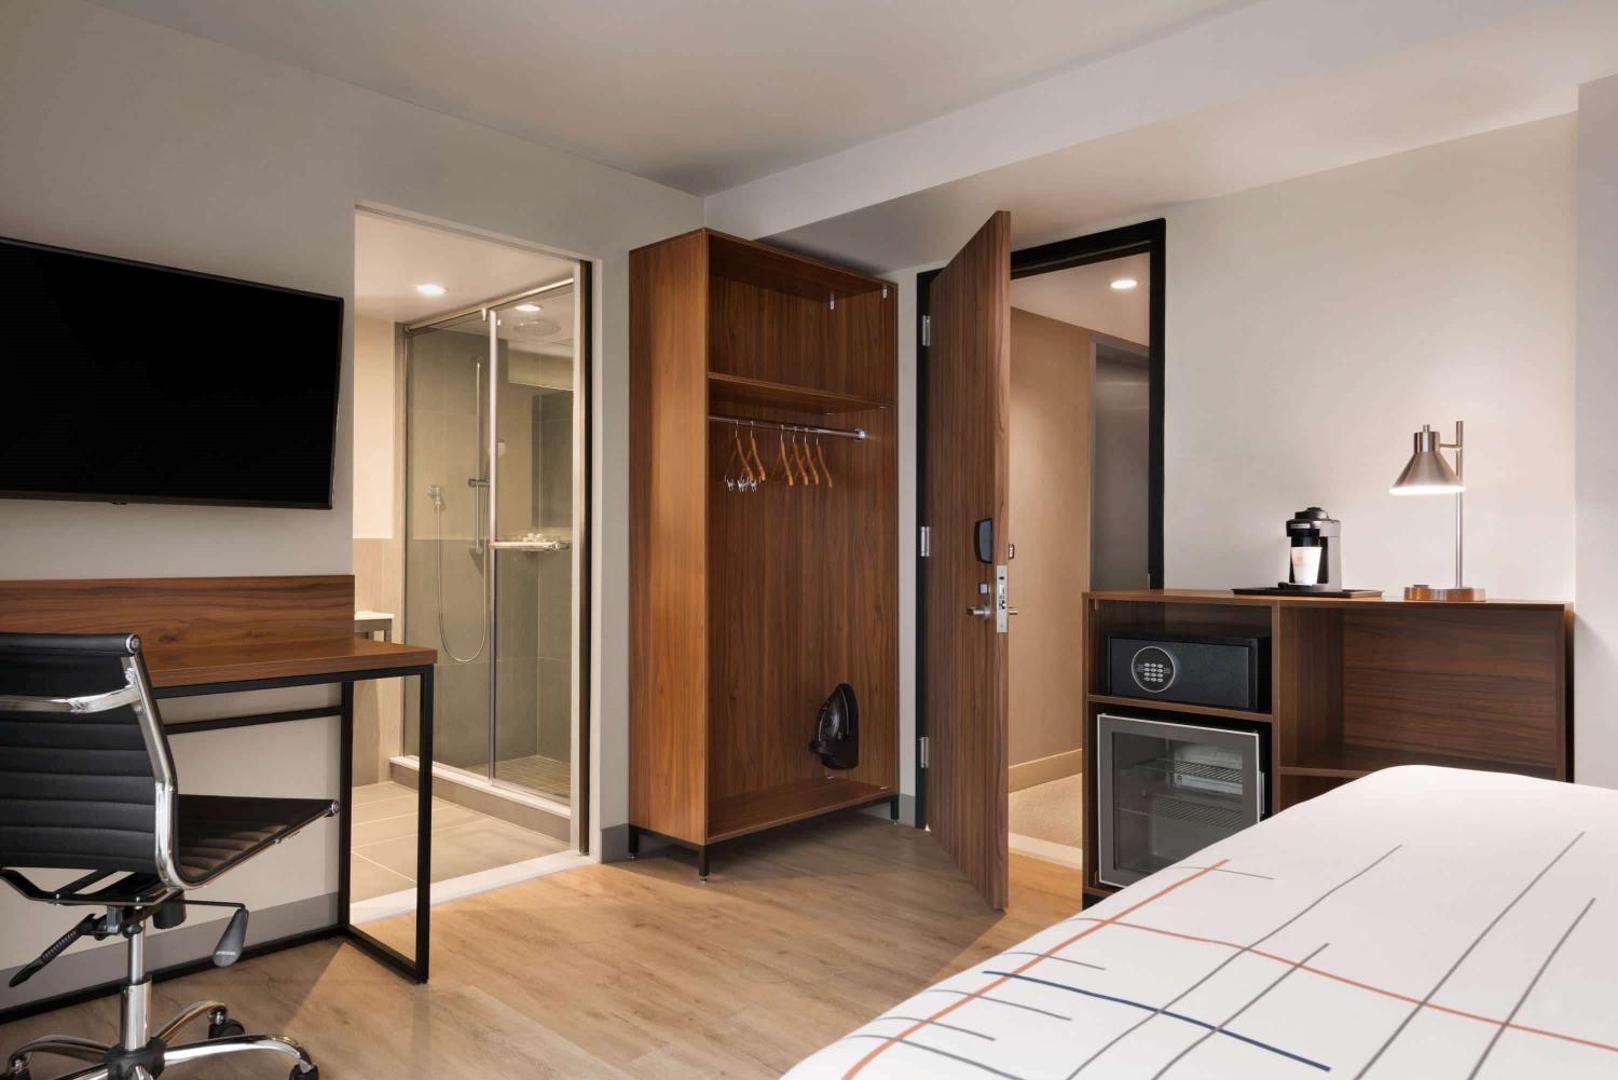 La Quinta Inn & Suites by Wyndham Times Square South